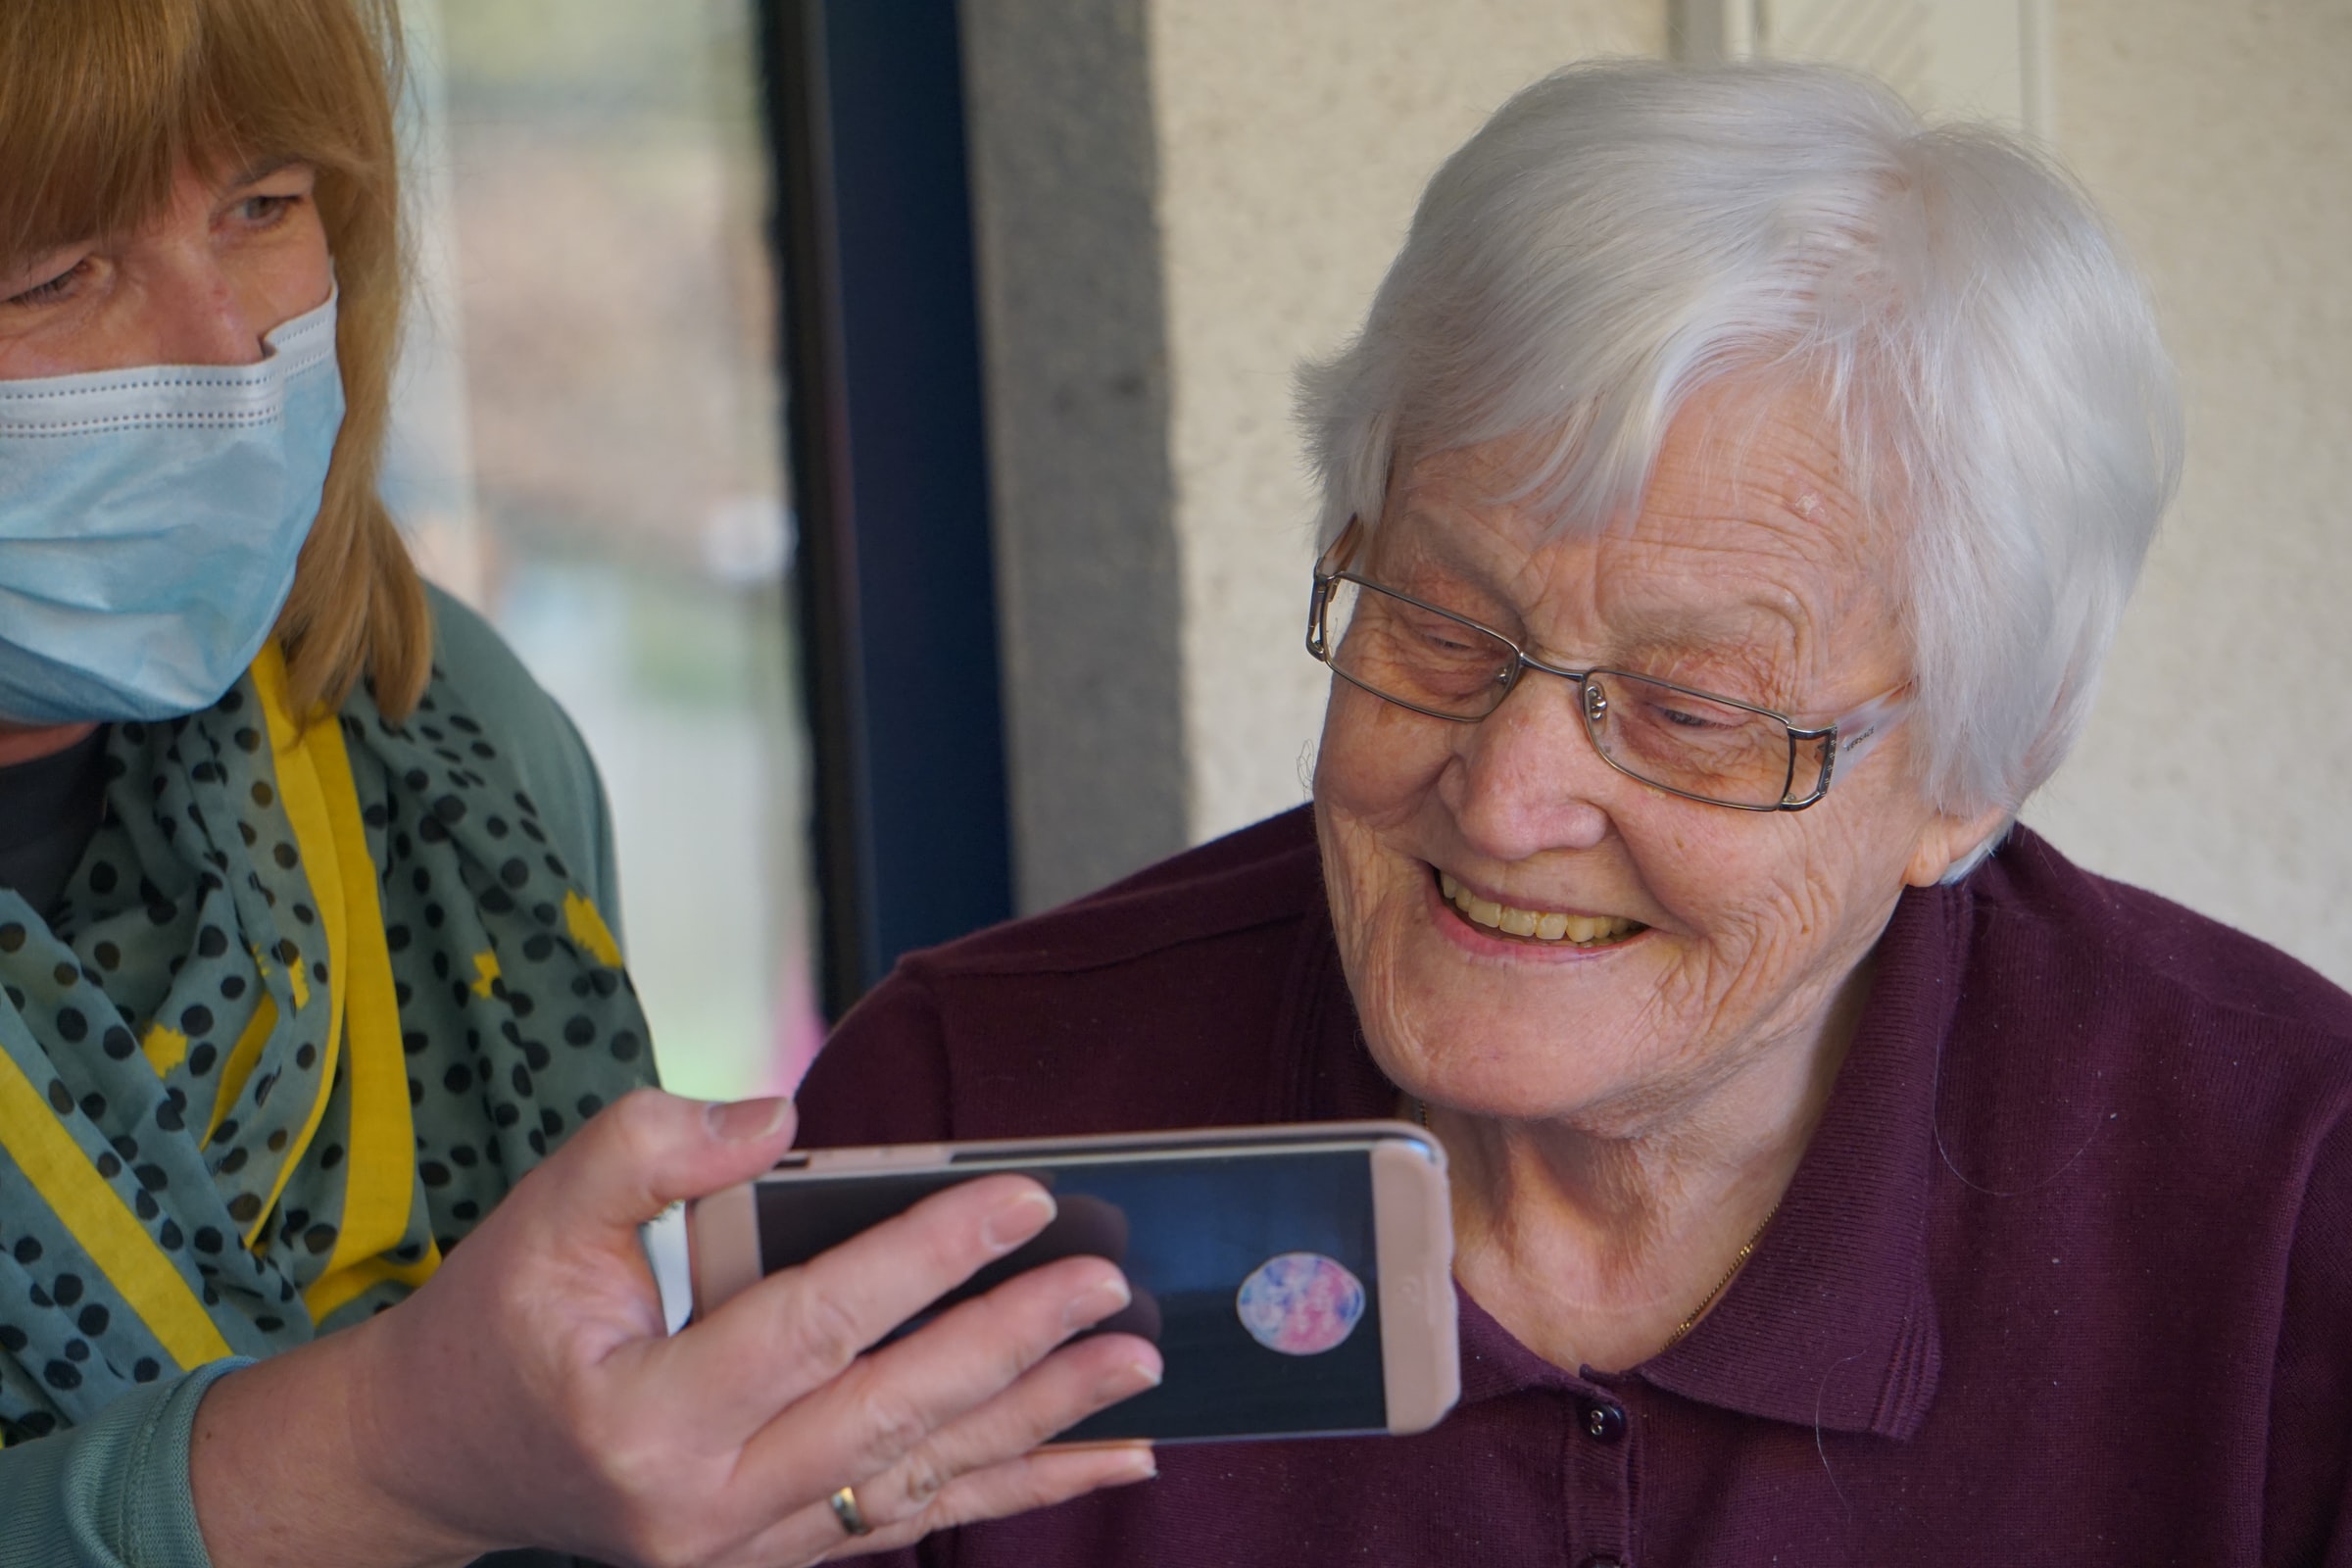 How Can New Technologies Help Seniors